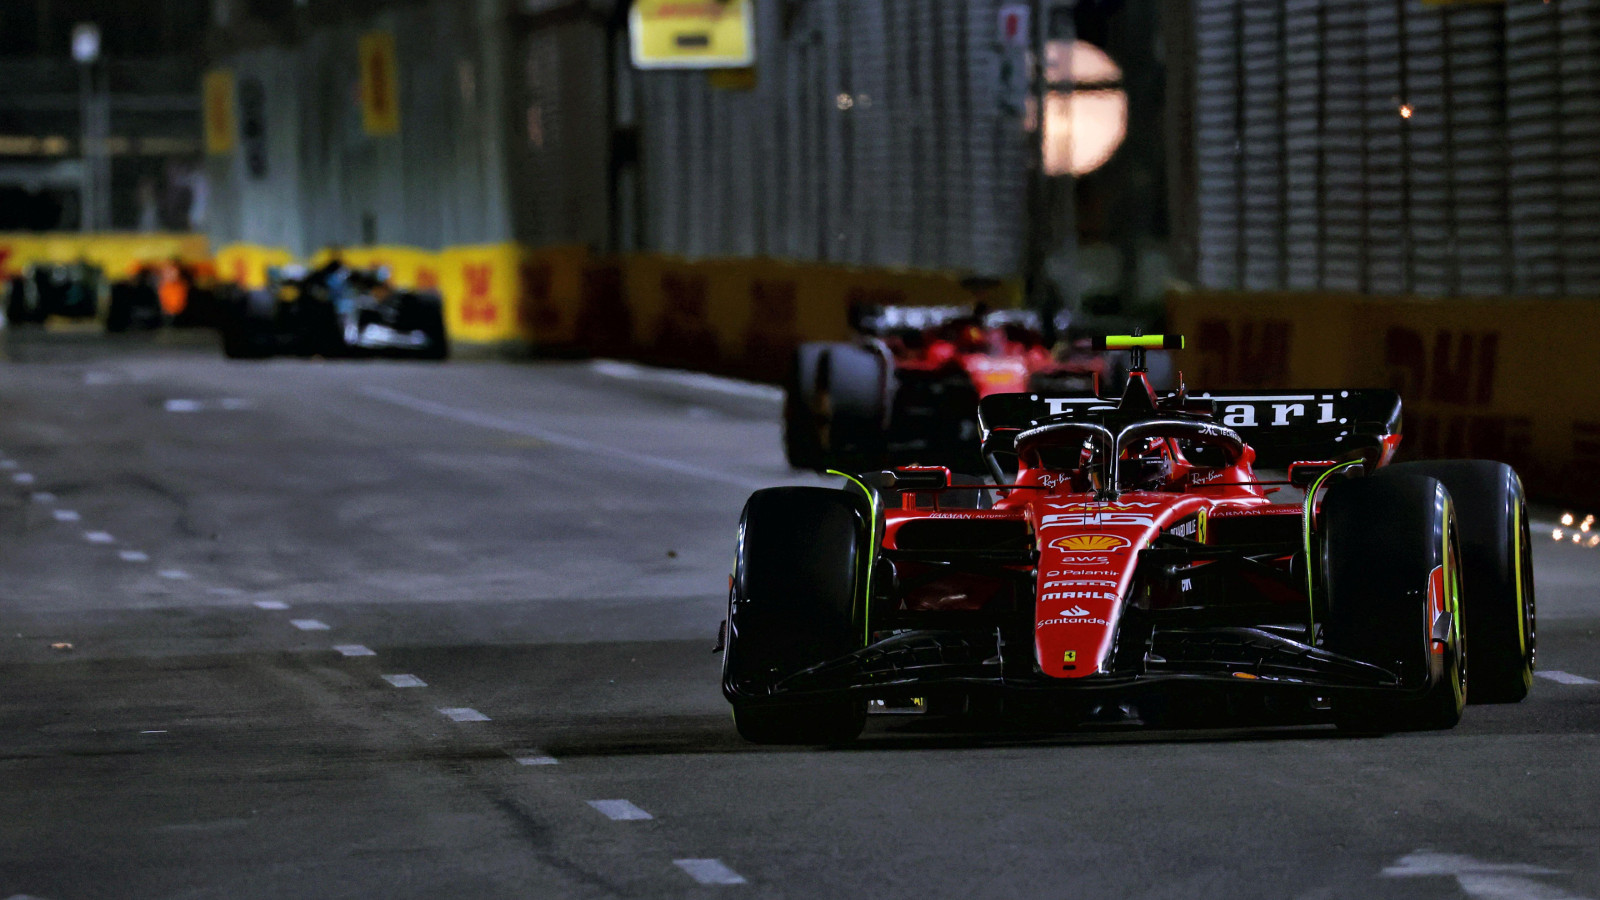 Ferrari's Carlos Sainz leads the Singapore Grand Prix.